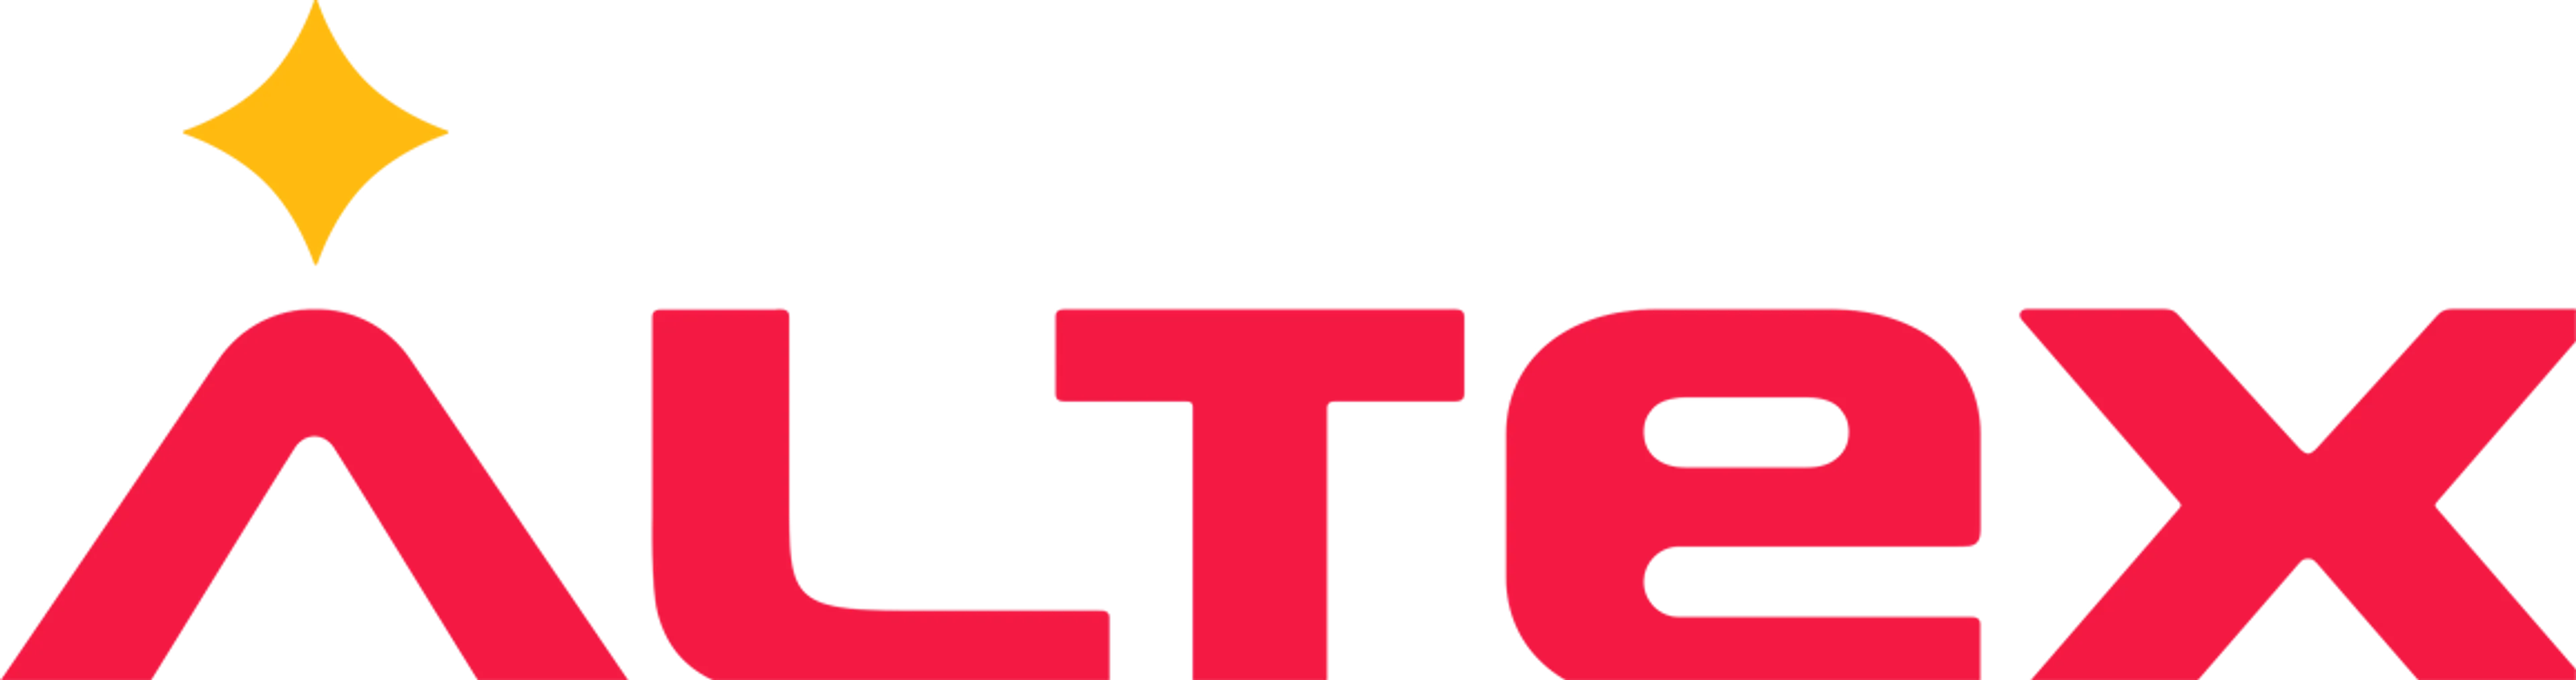 ALTEX logo